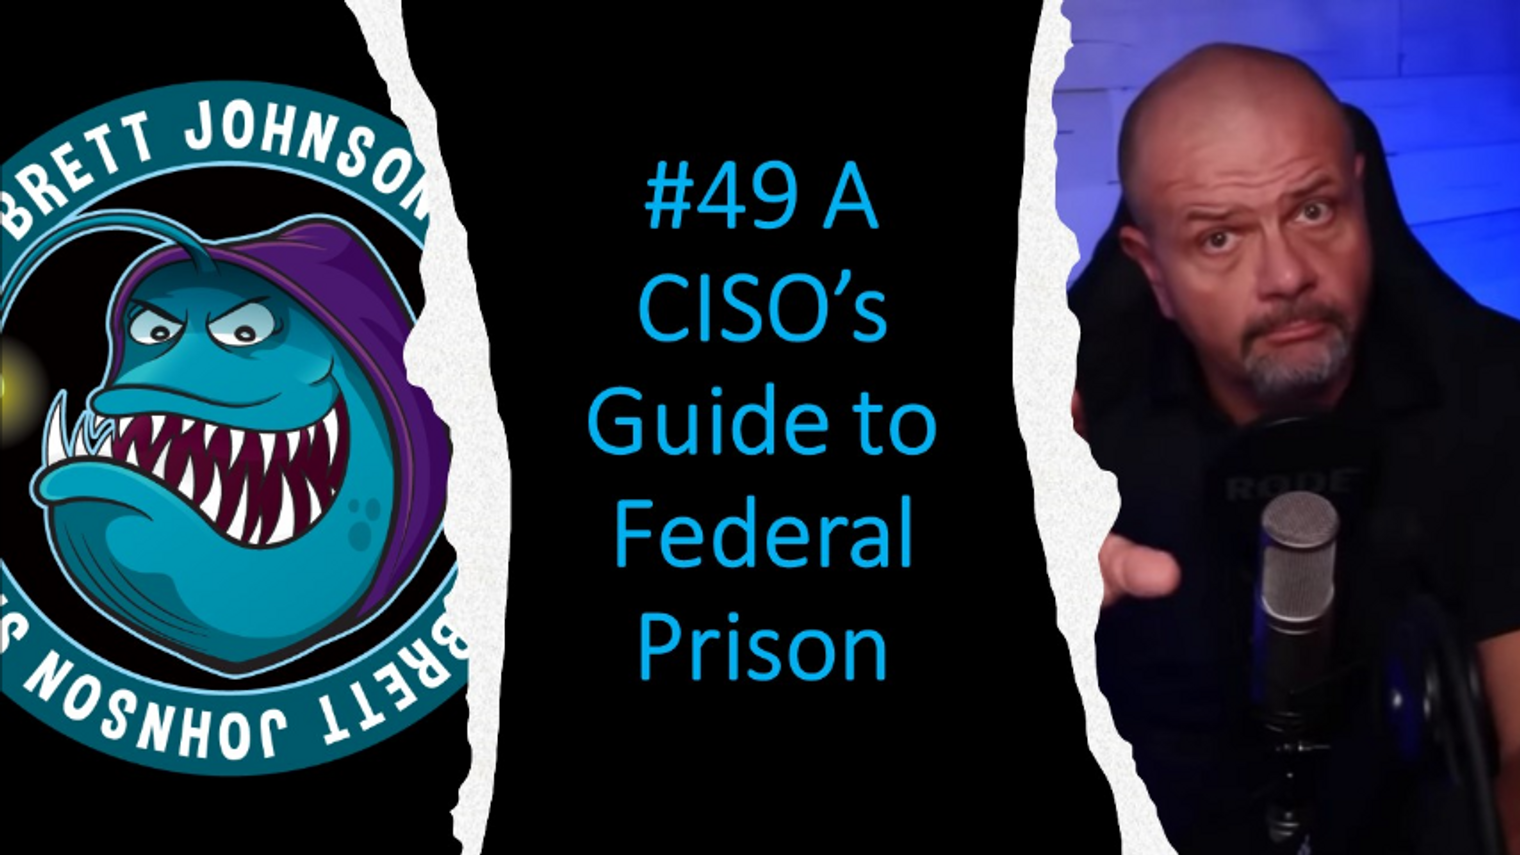 #49 A CISO's Guide to Federal Prison